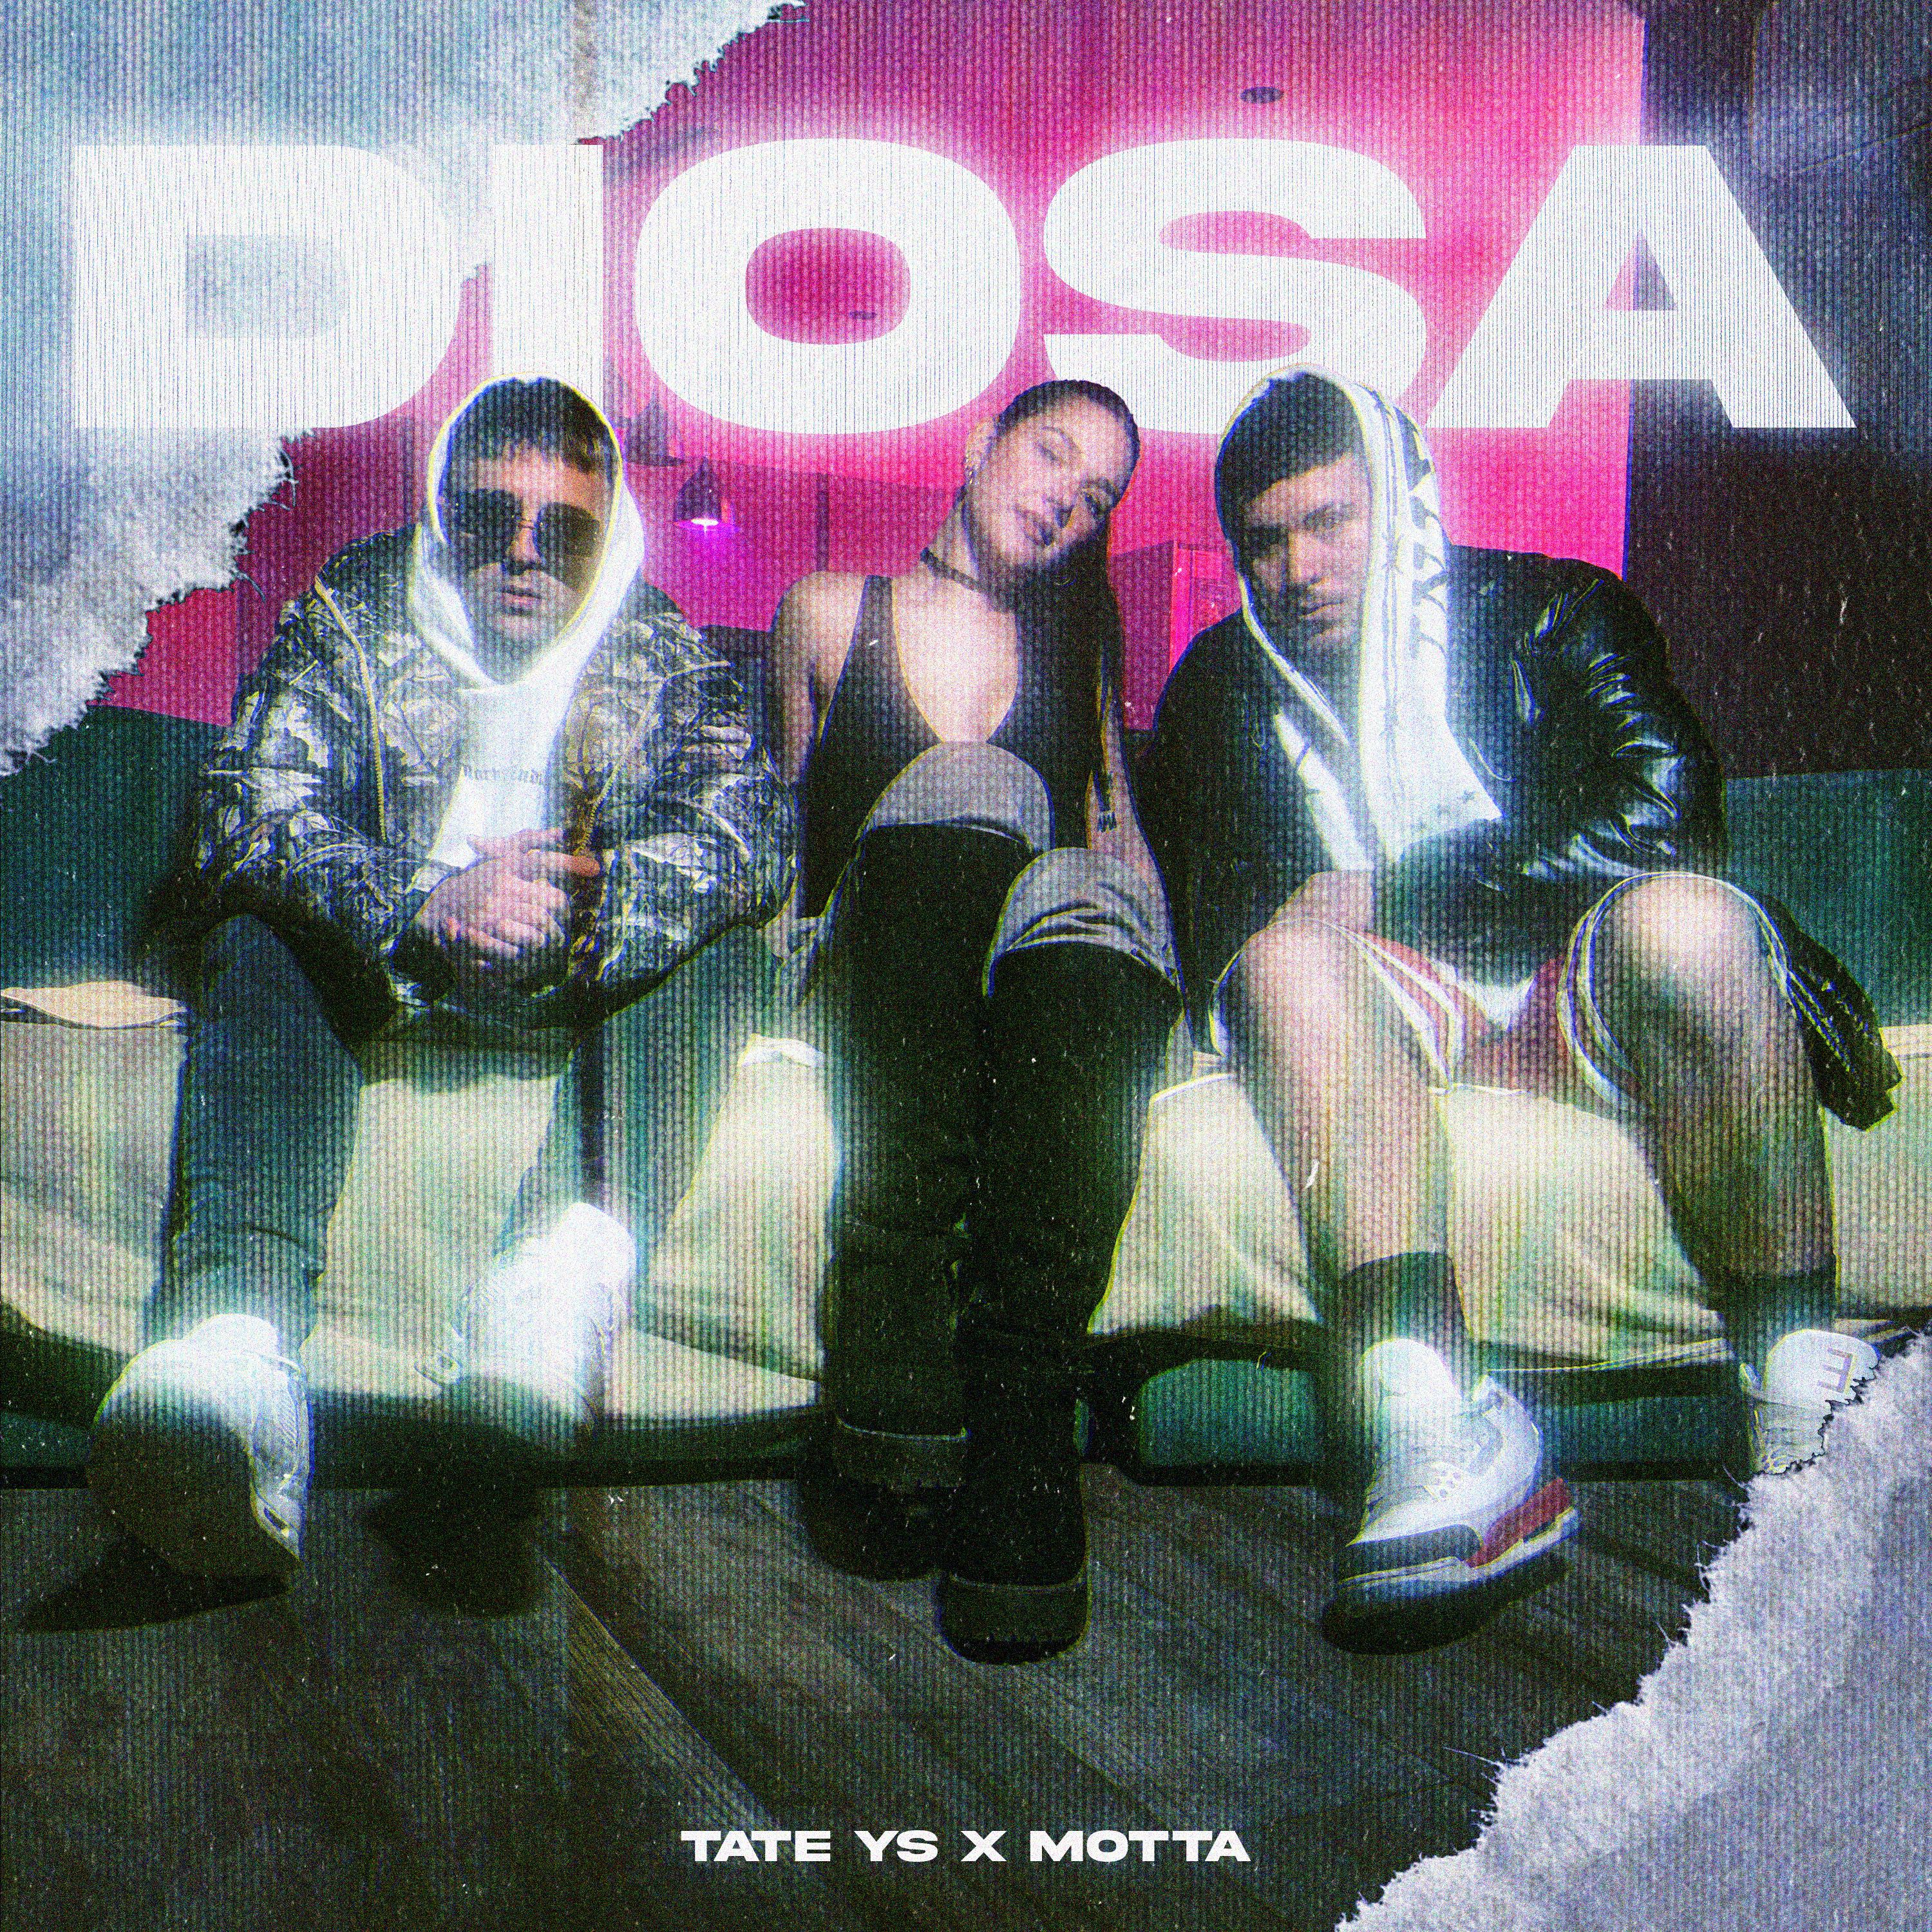 Постер альбома Diosa